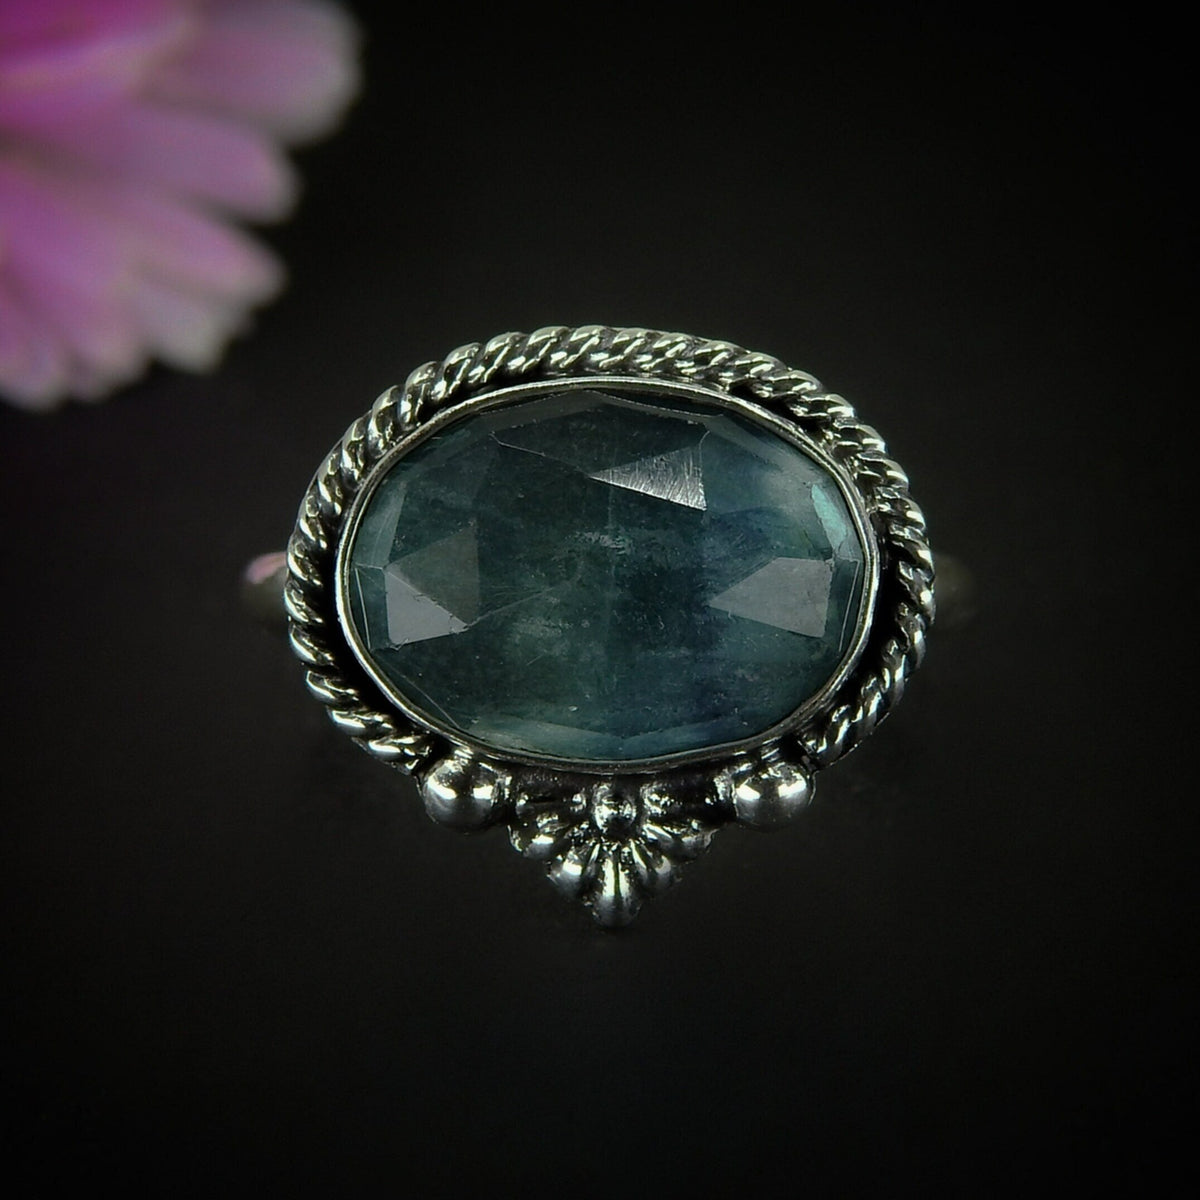 Rose Cut Fluorite Ring - Size 9 - Sterling Silver - Faceted Fluorite Jewelry - Green Fluorite Ring - OOAK Teal Flurorite Statement Jewellery